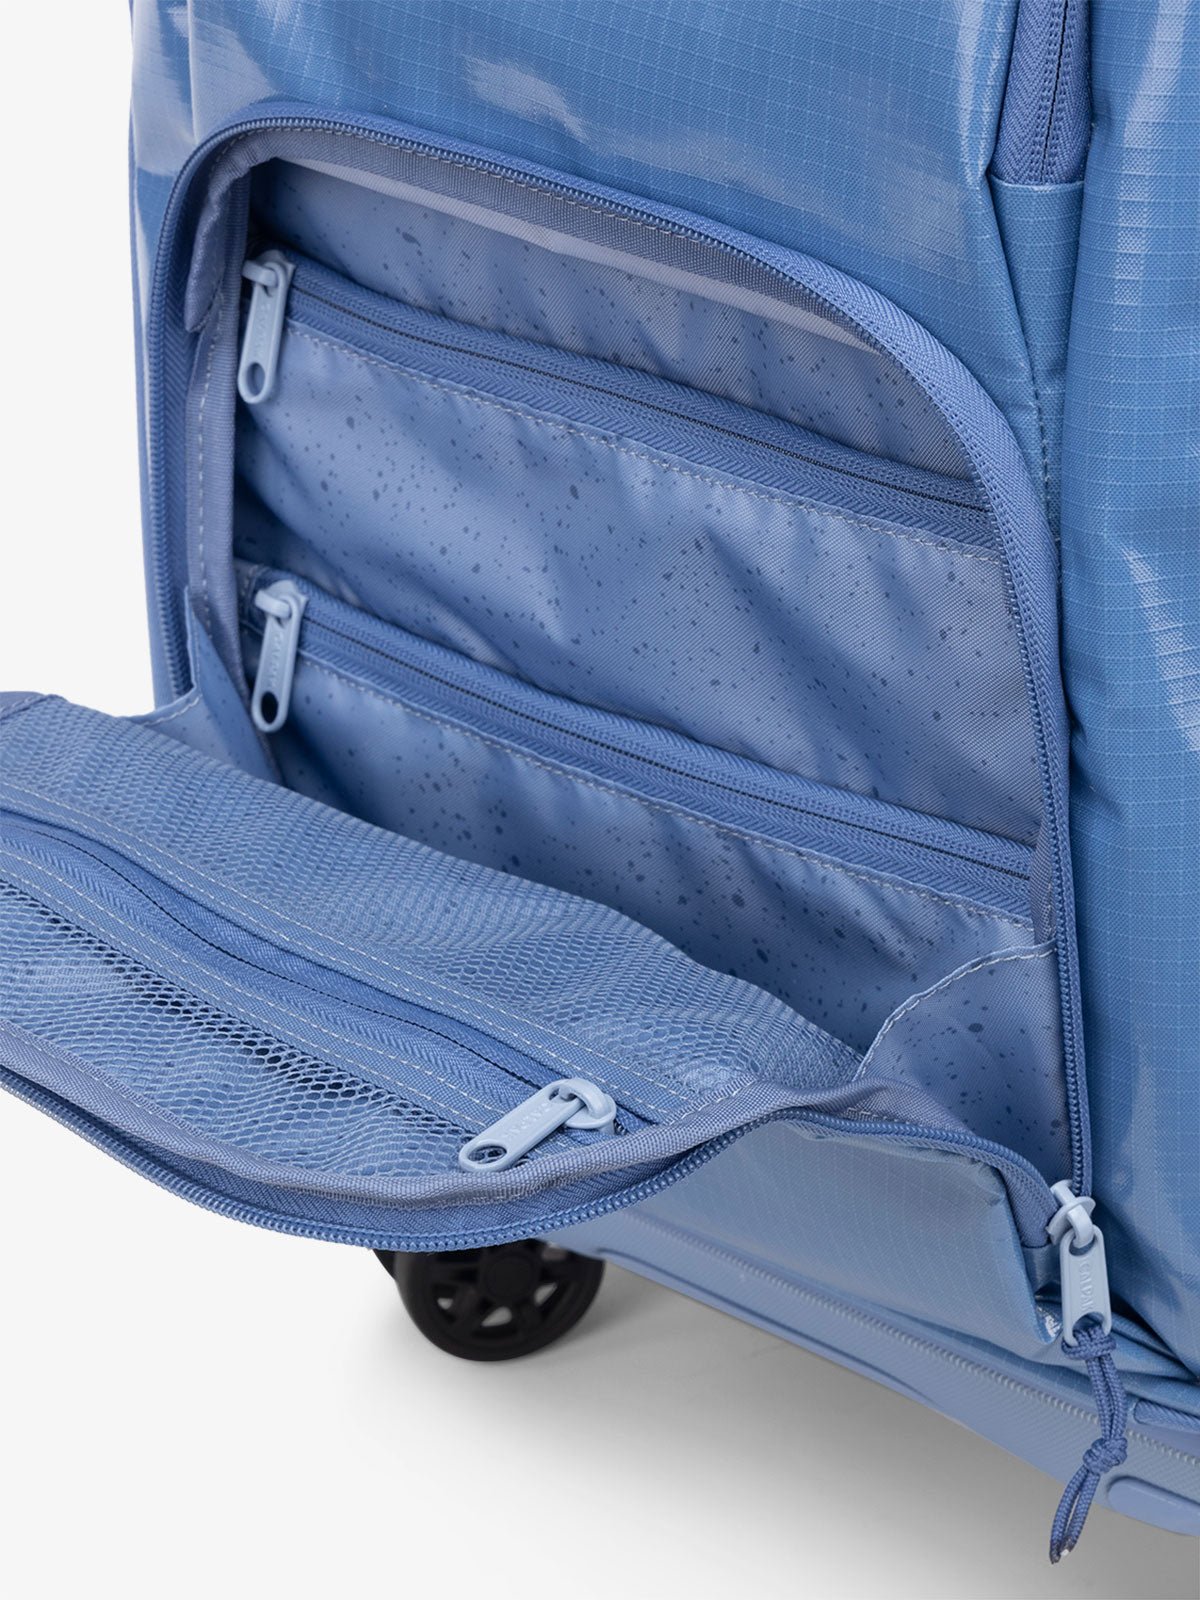 CALPAK Terra Carry-On suitcase front interior pockets in glacier